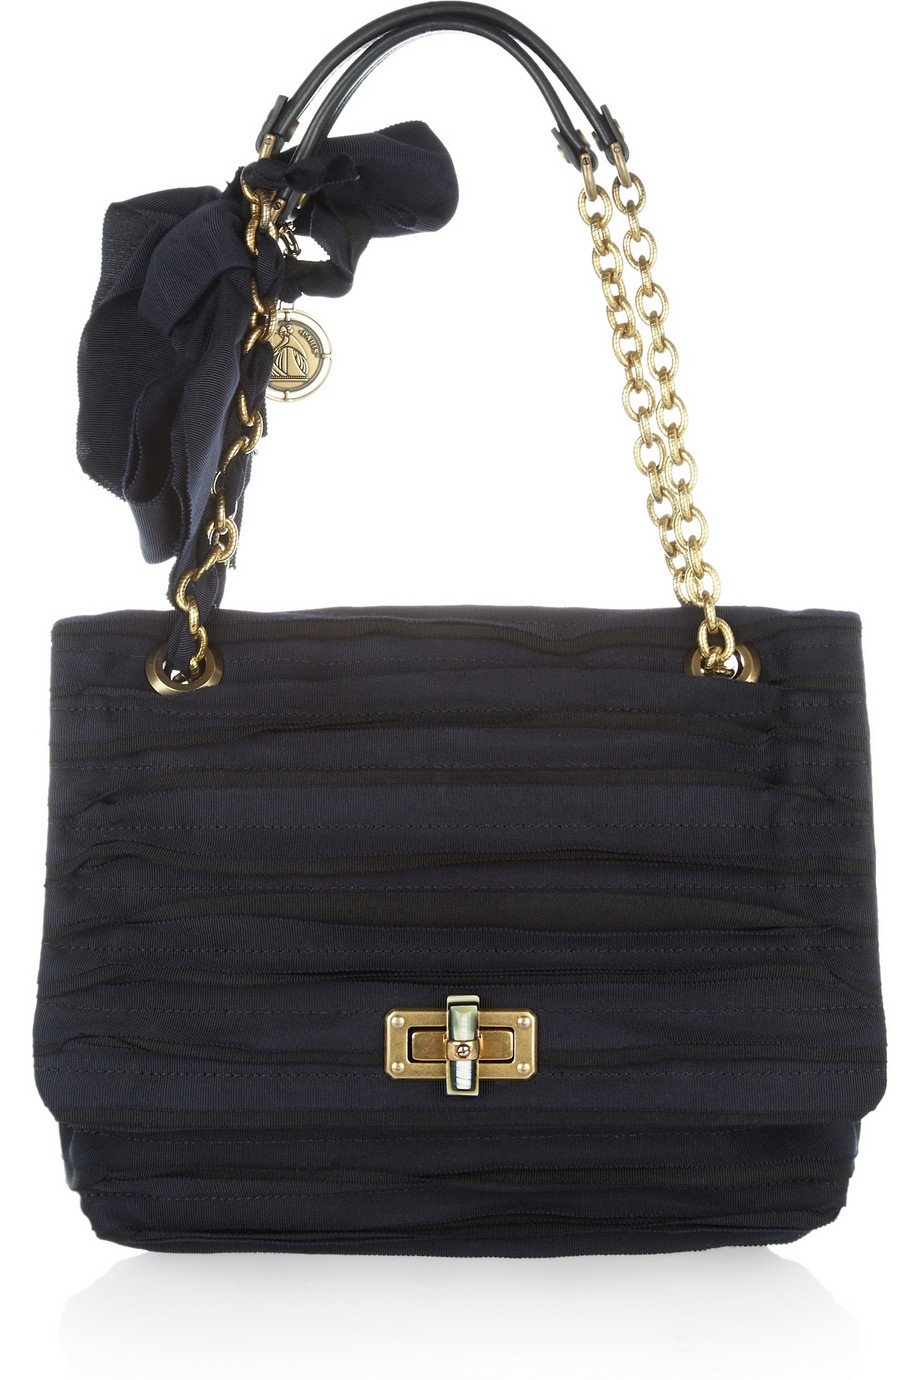 Viviana Espitia Style: Black Hand Bags